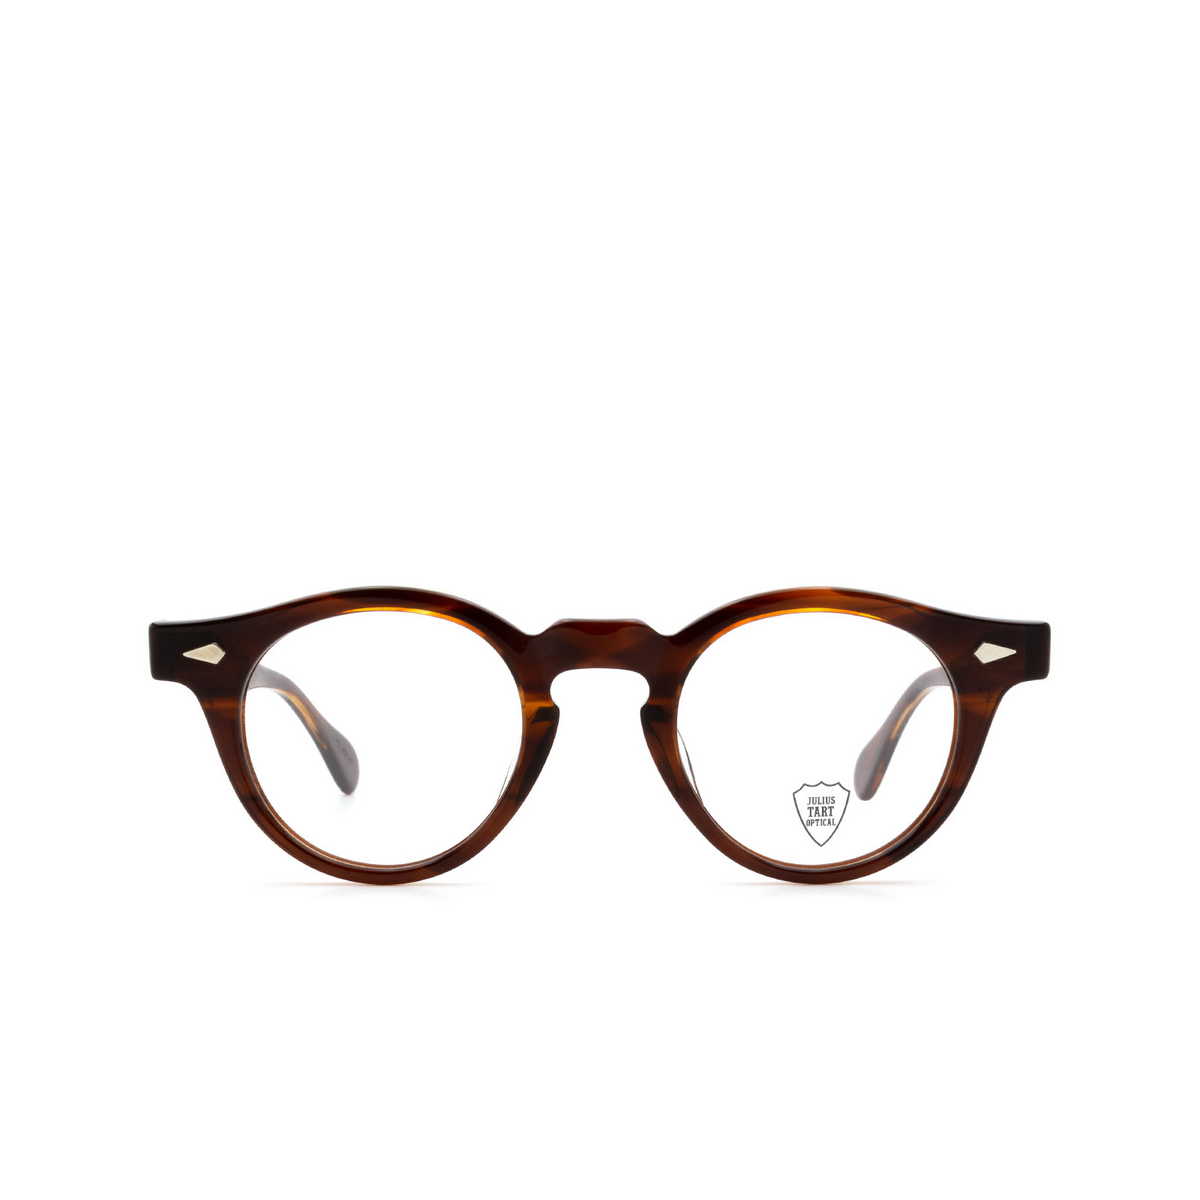 Julius Tart HAROLD Eyeglasses DEMI-AMBER - front view